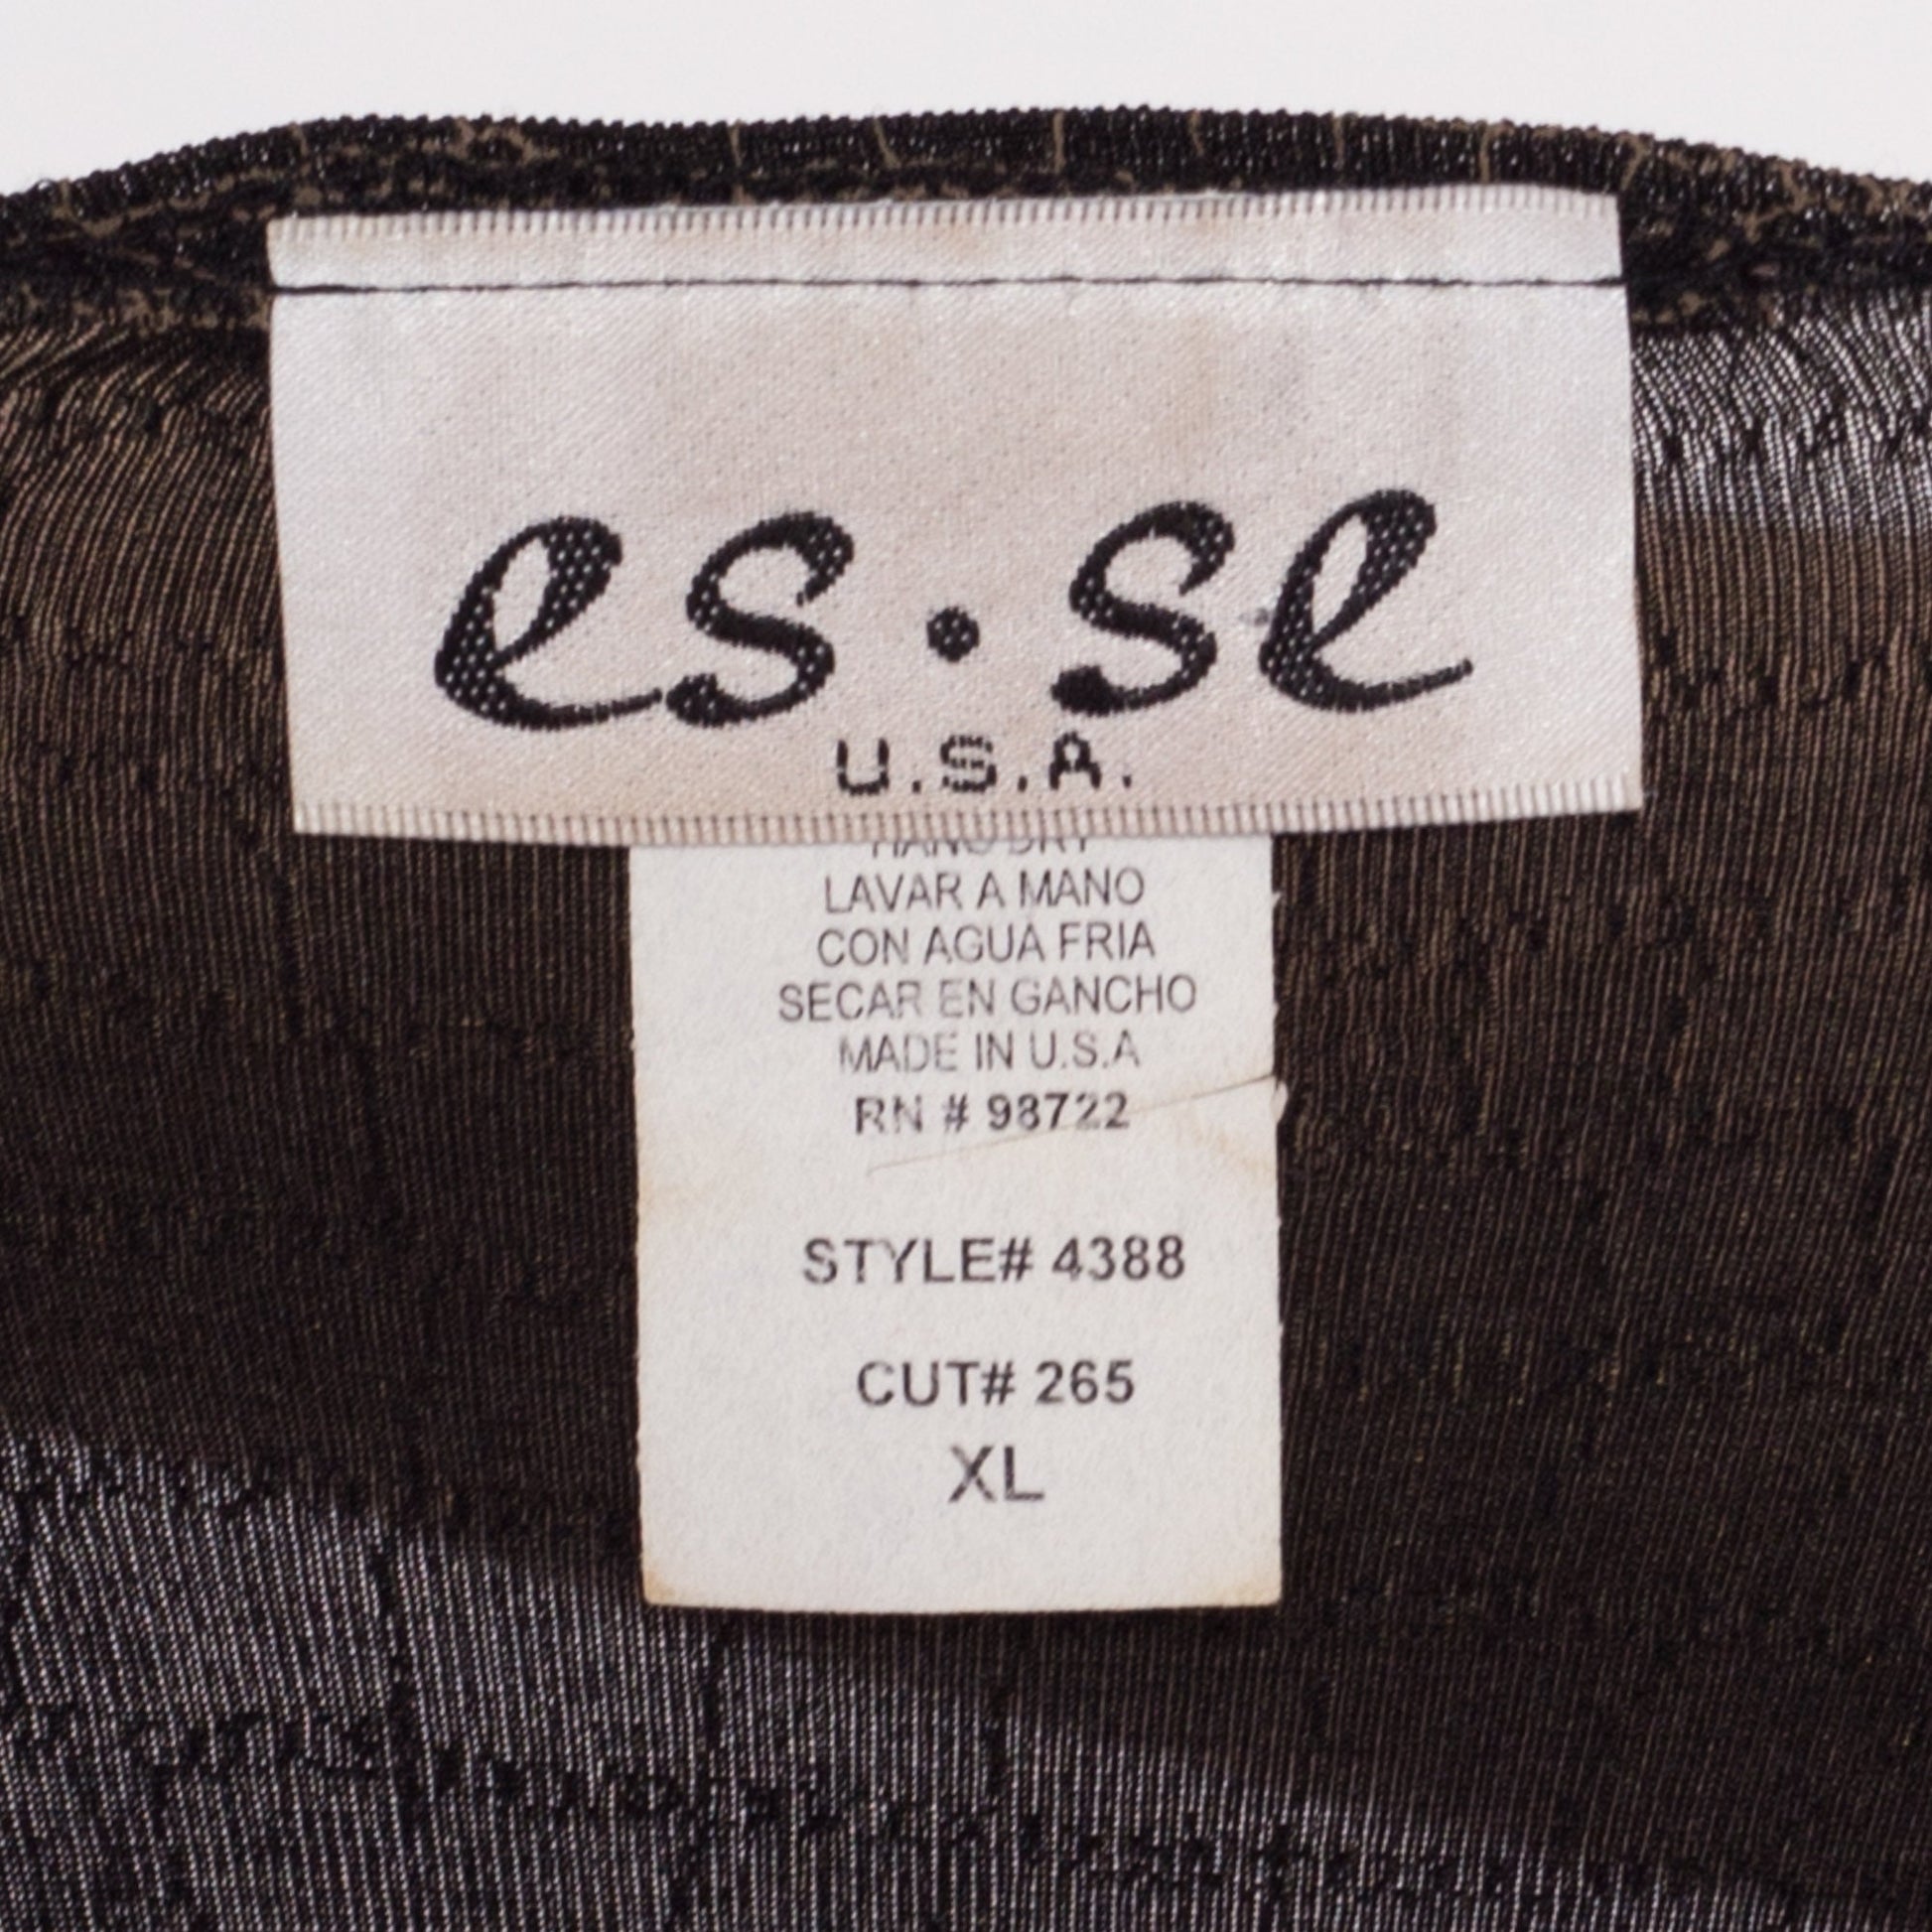 90s Slinky Chain Web Print Shirt - Large | Vintage Black Brown Two Tone Short Sleeve Grunge Top